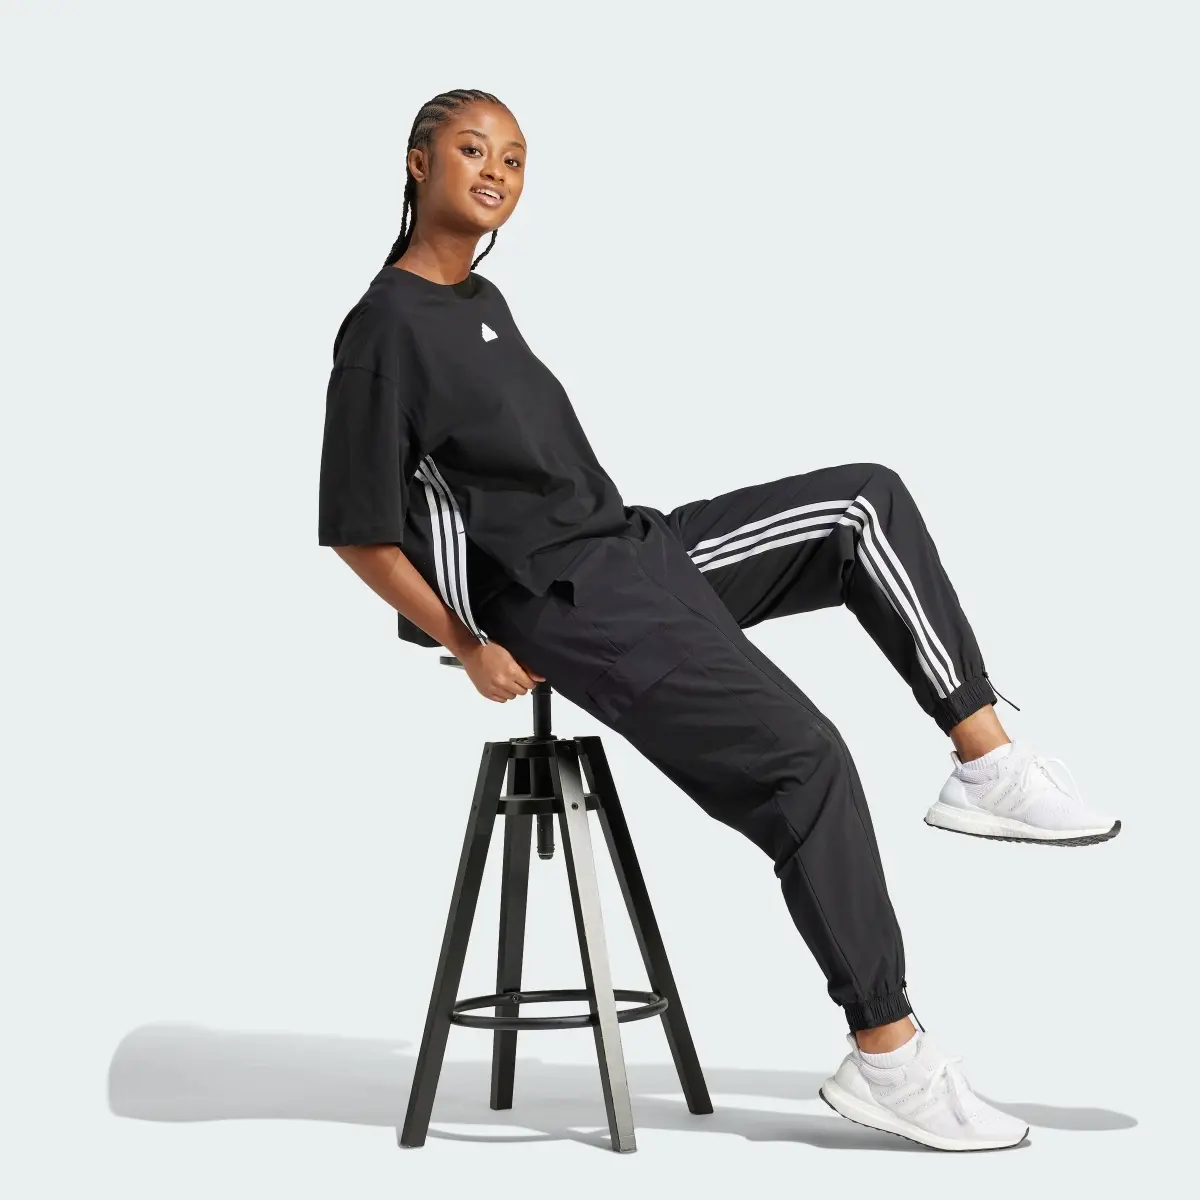 Adidas Express All-Gender Cargo Pants. 3